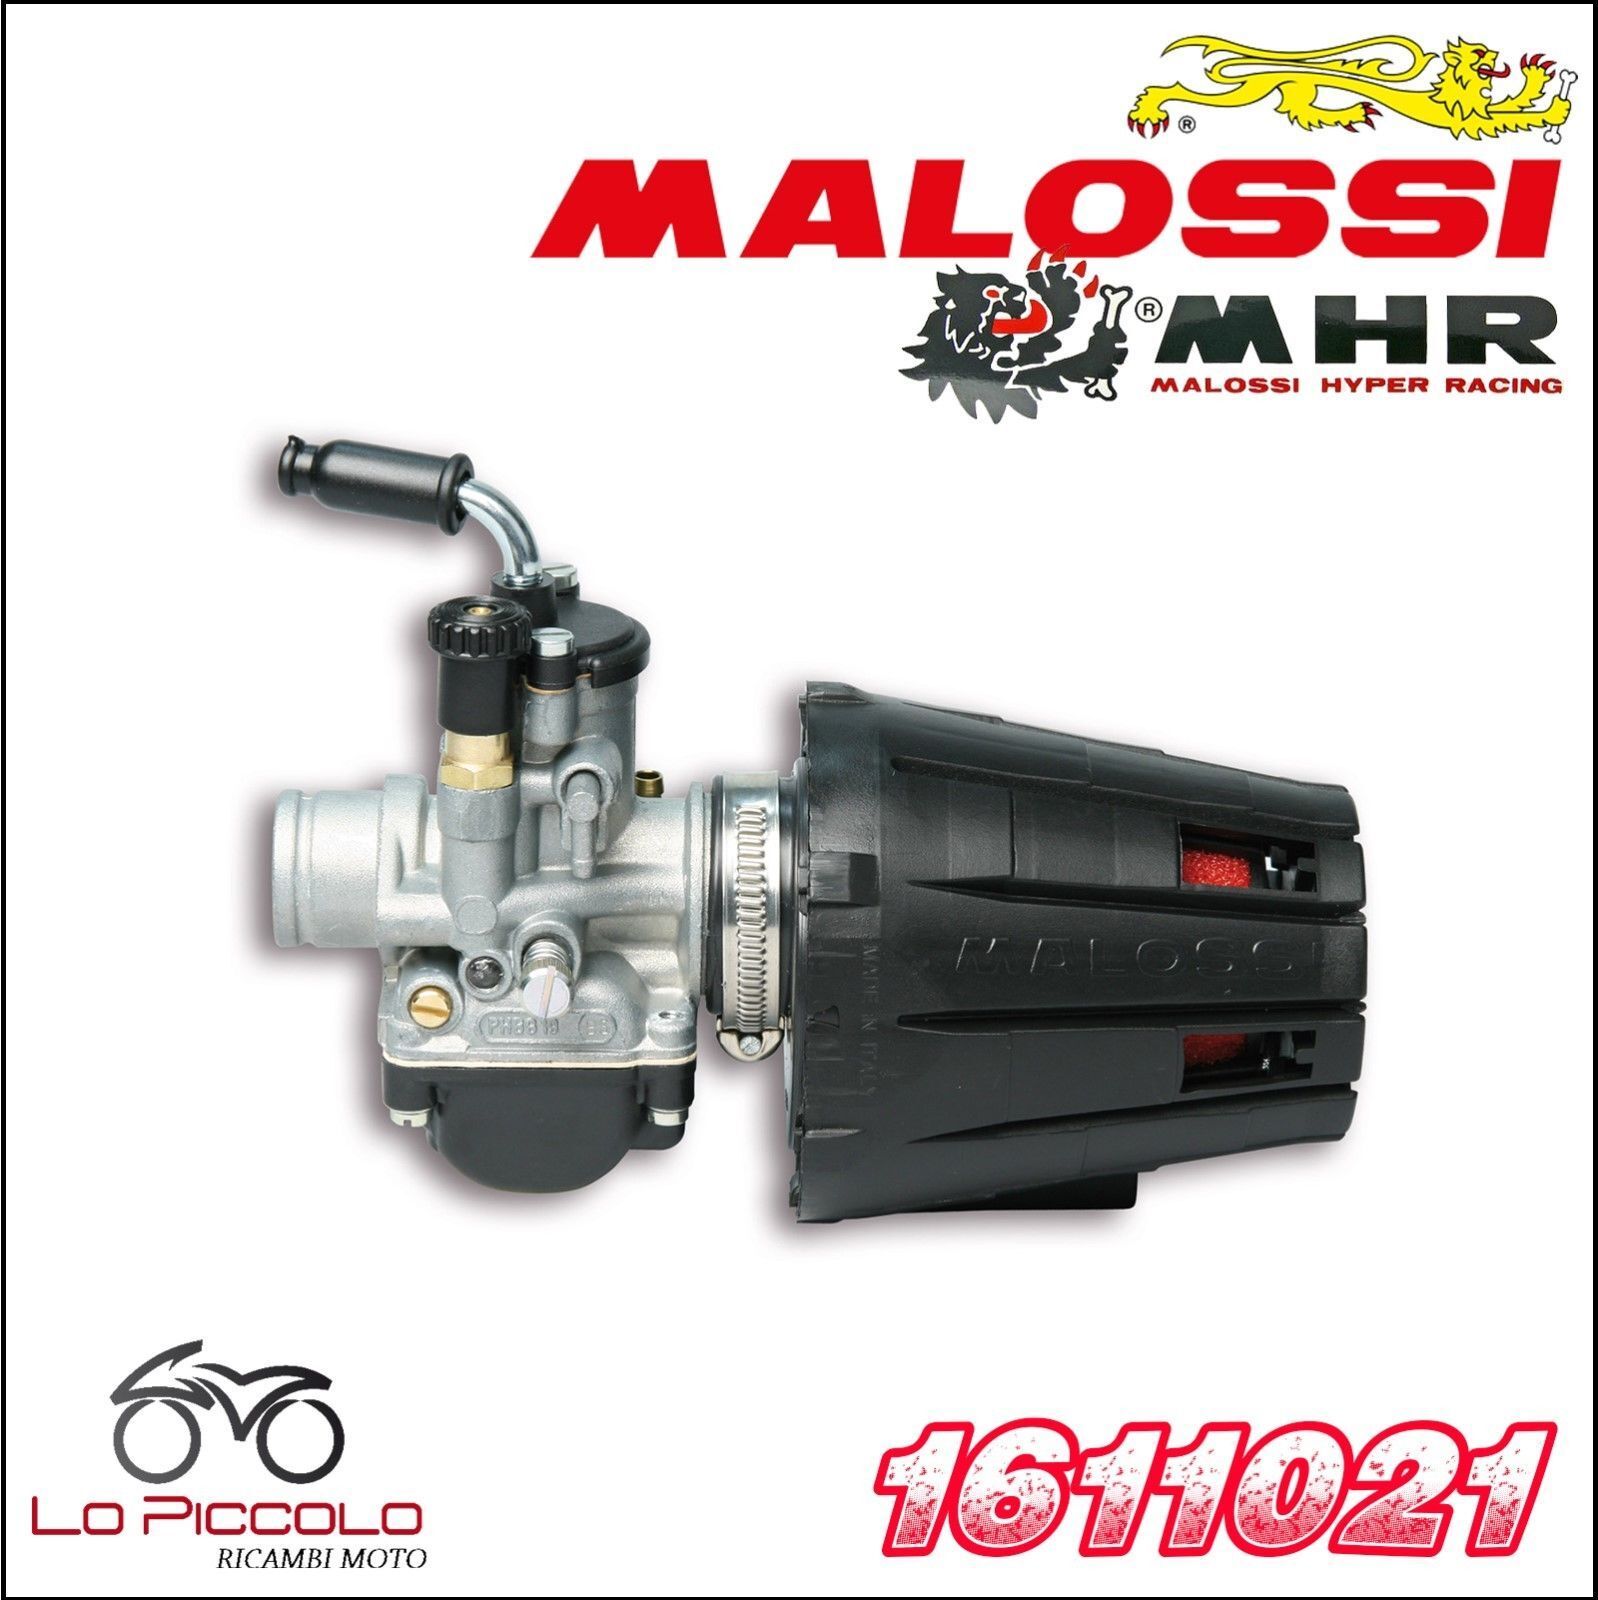 1611021 Carburettor Complete MALOSSI MHR 19 Max 60% OFF F12 Phbg Complete Free Shipping BS Malaguti